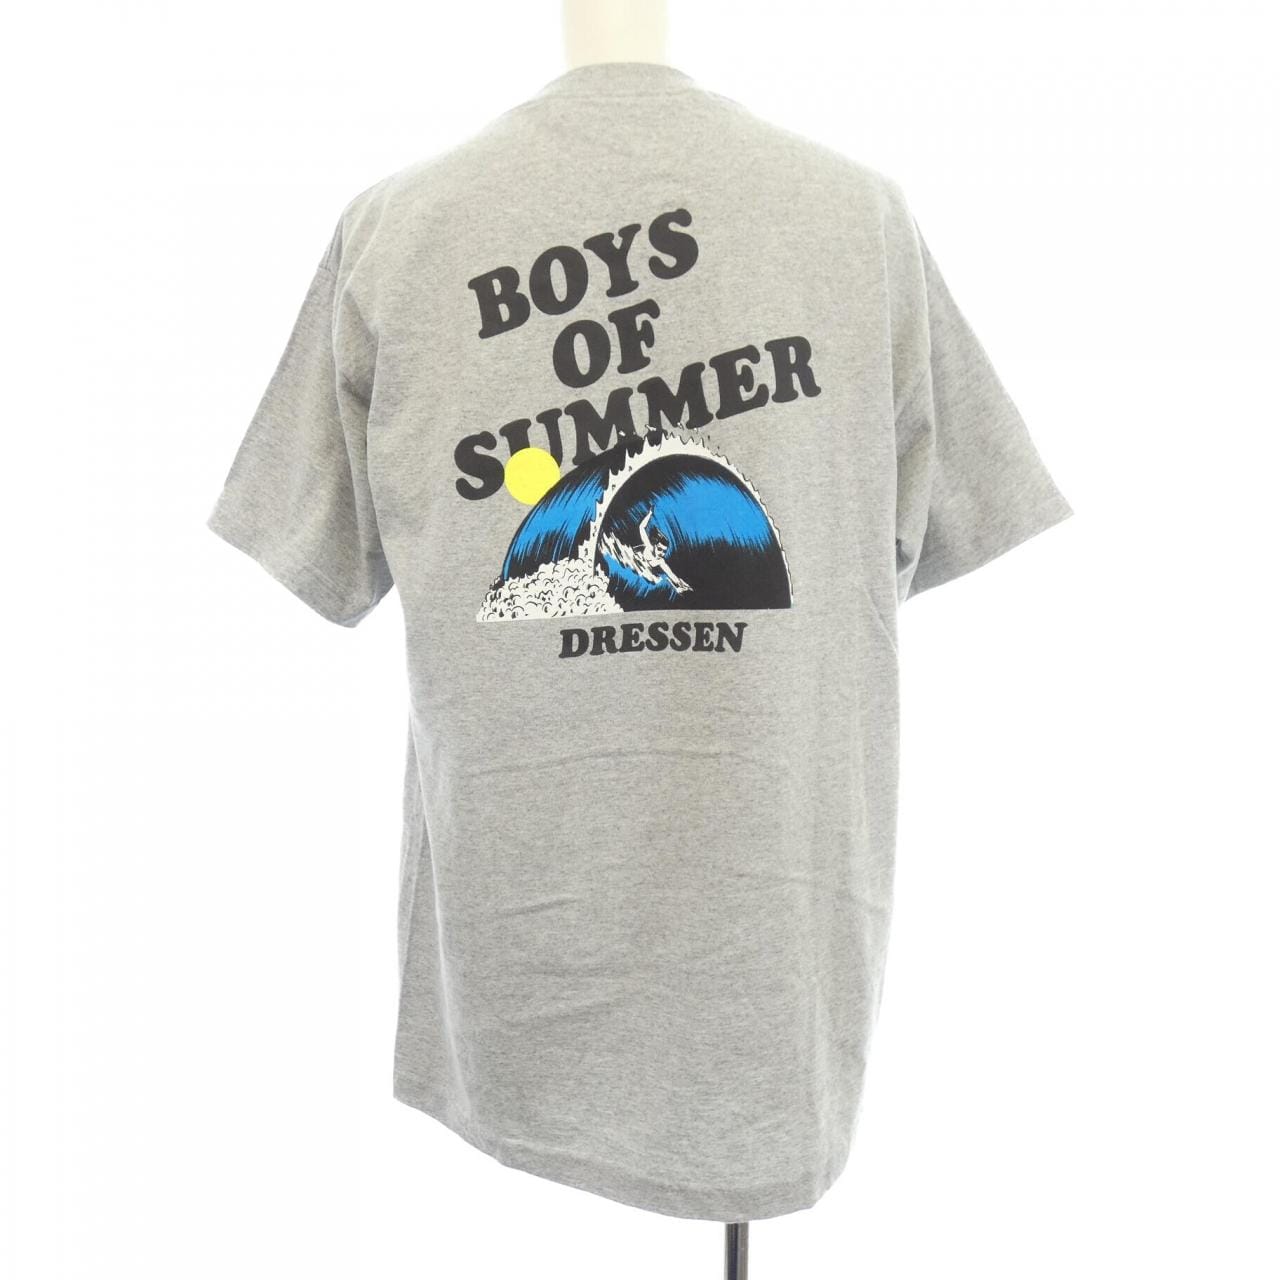 BOYS OF SUMMER T-shirt